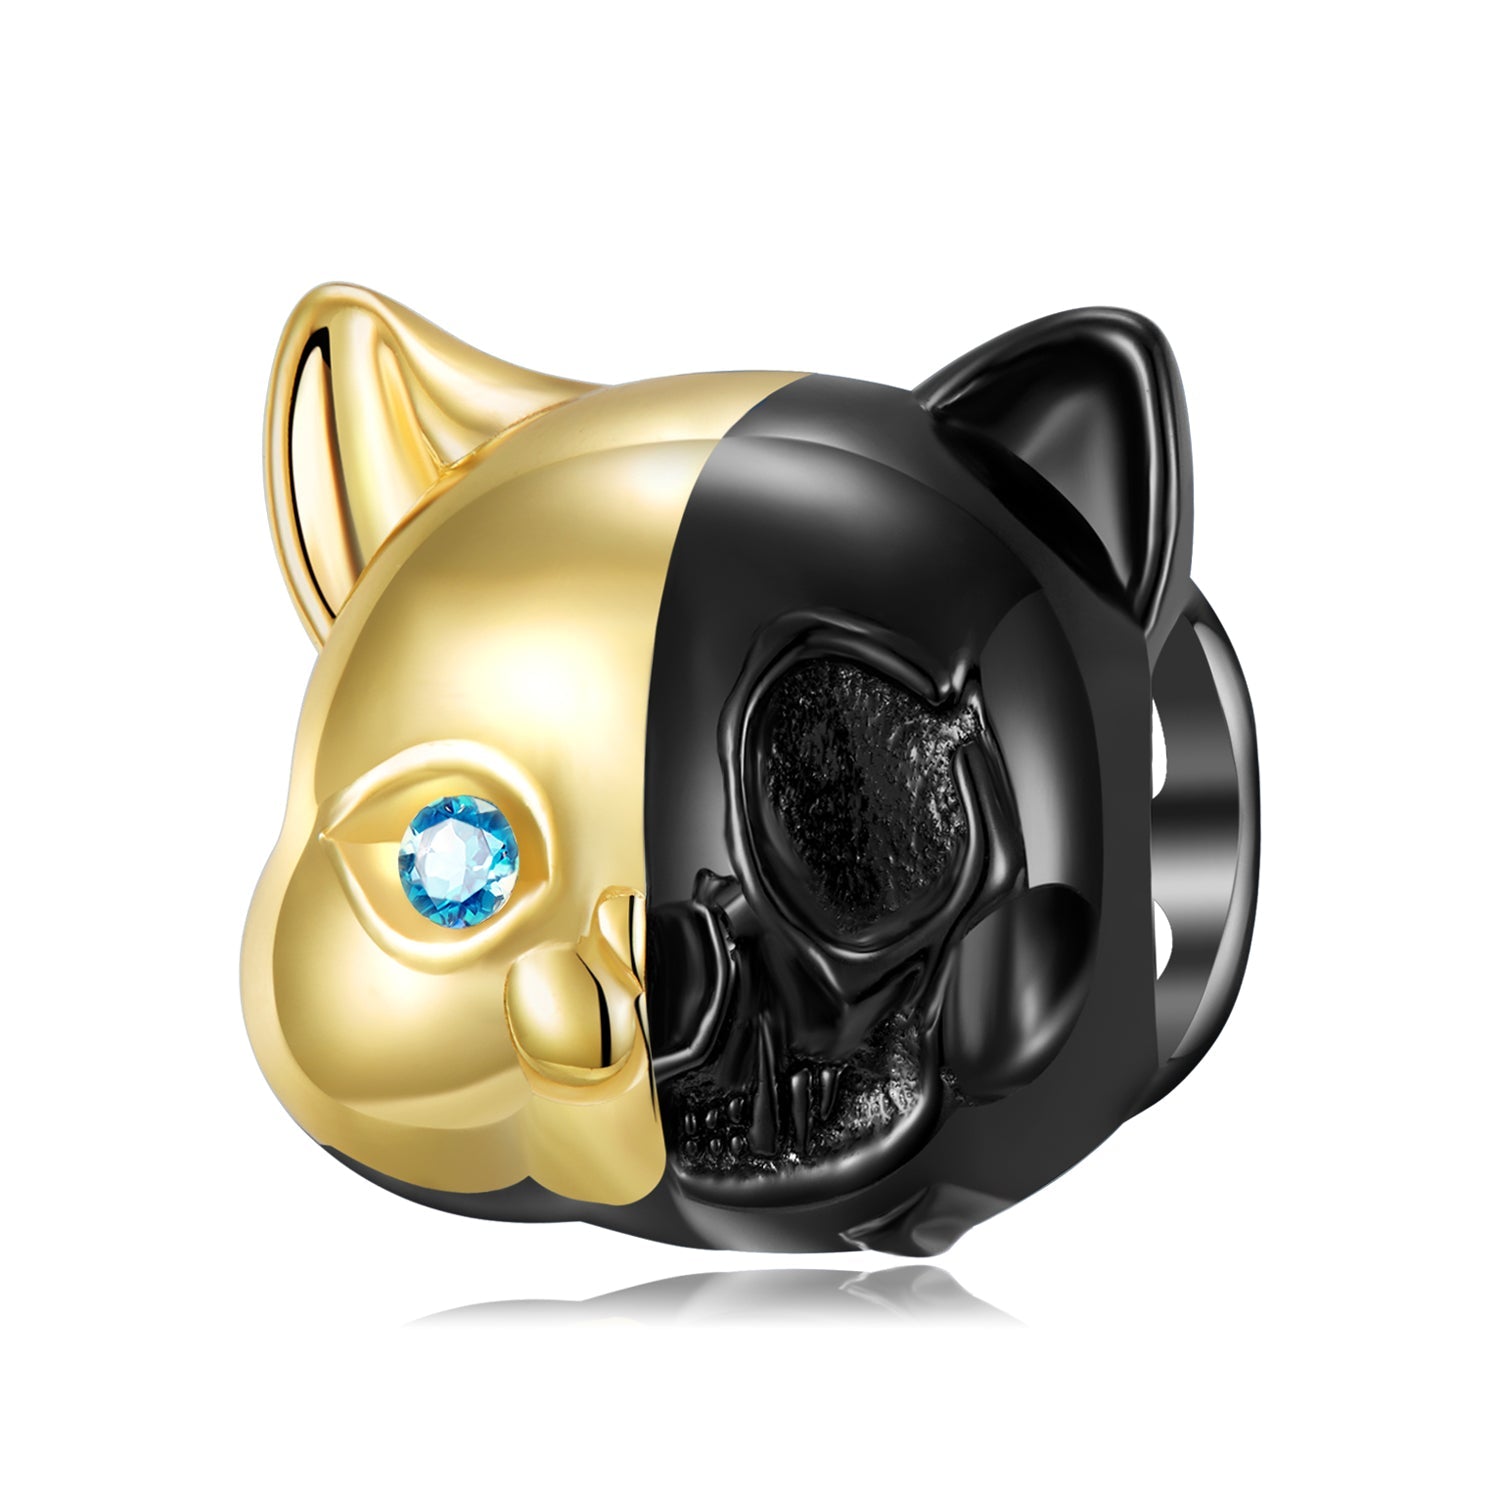 Golden cat x skull